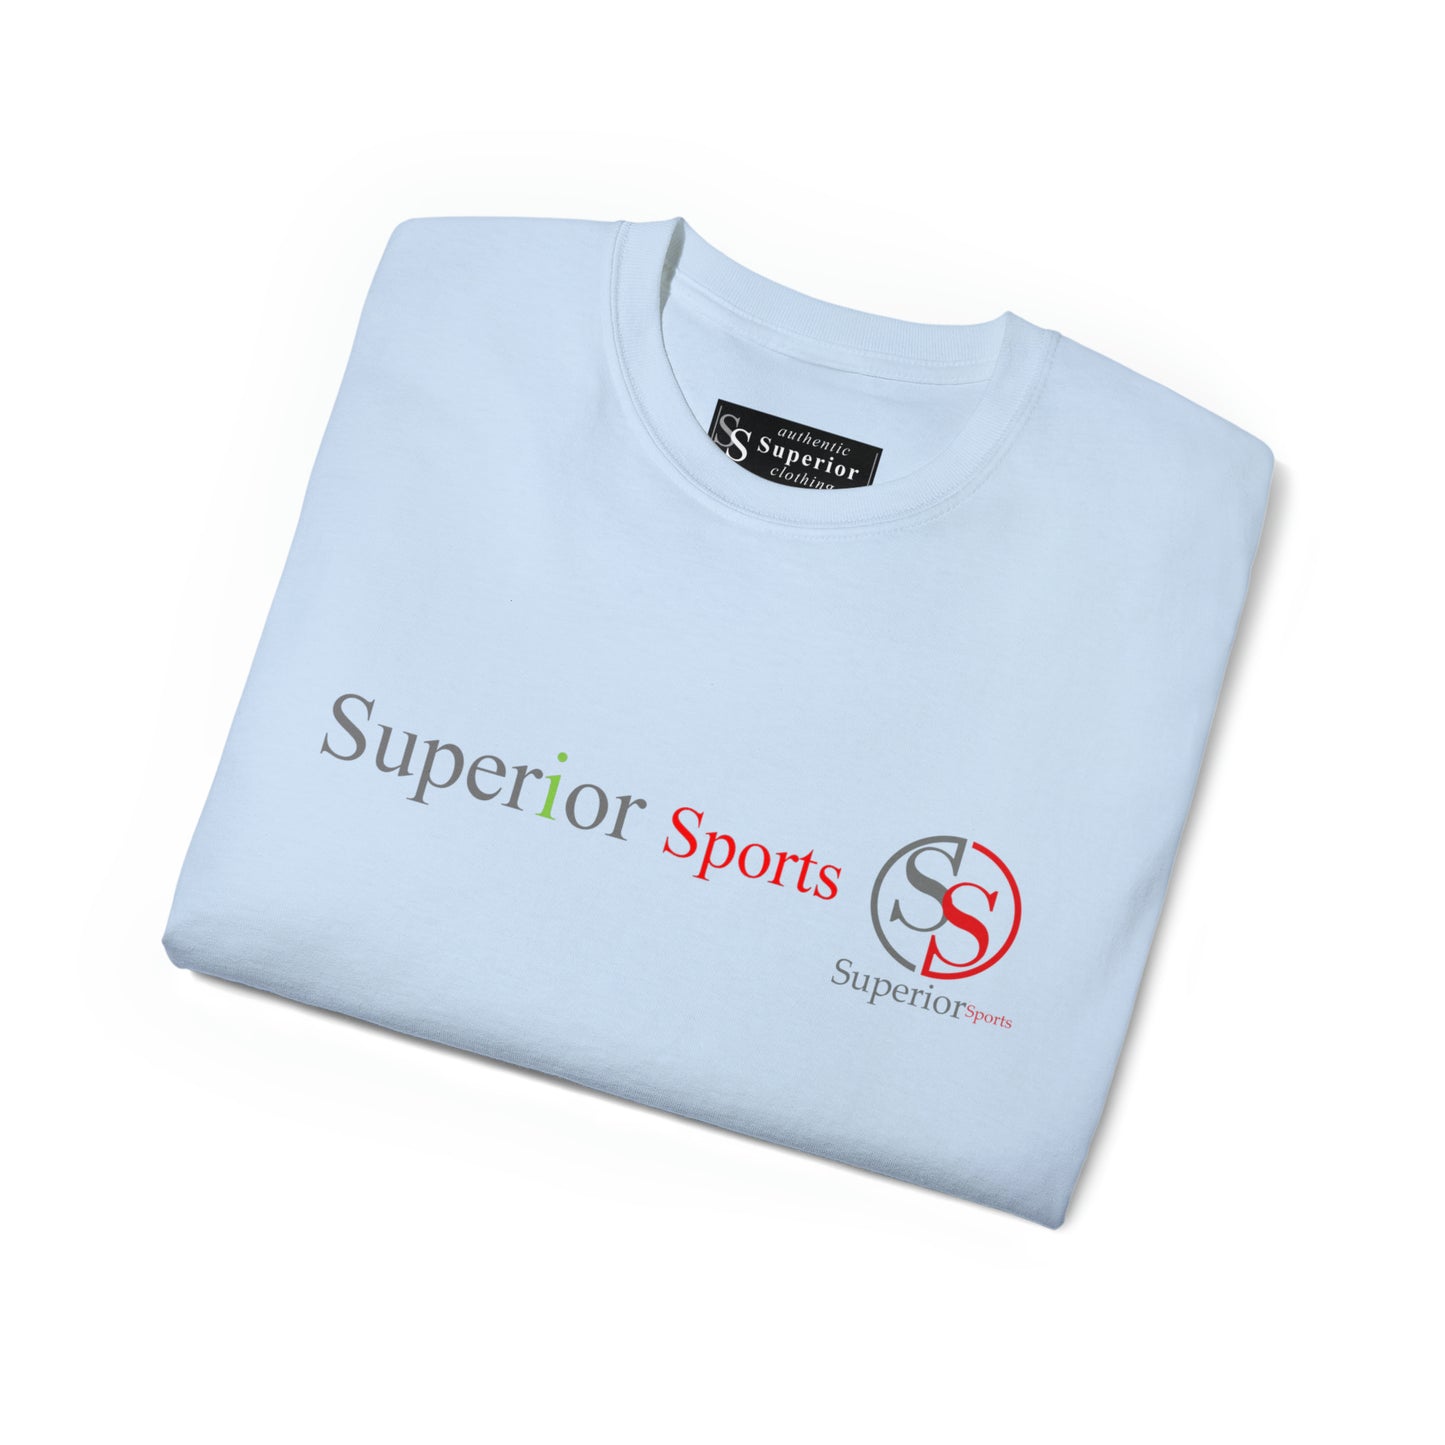 Superior Sports SS GR Unisex Ultra Cotton Tee